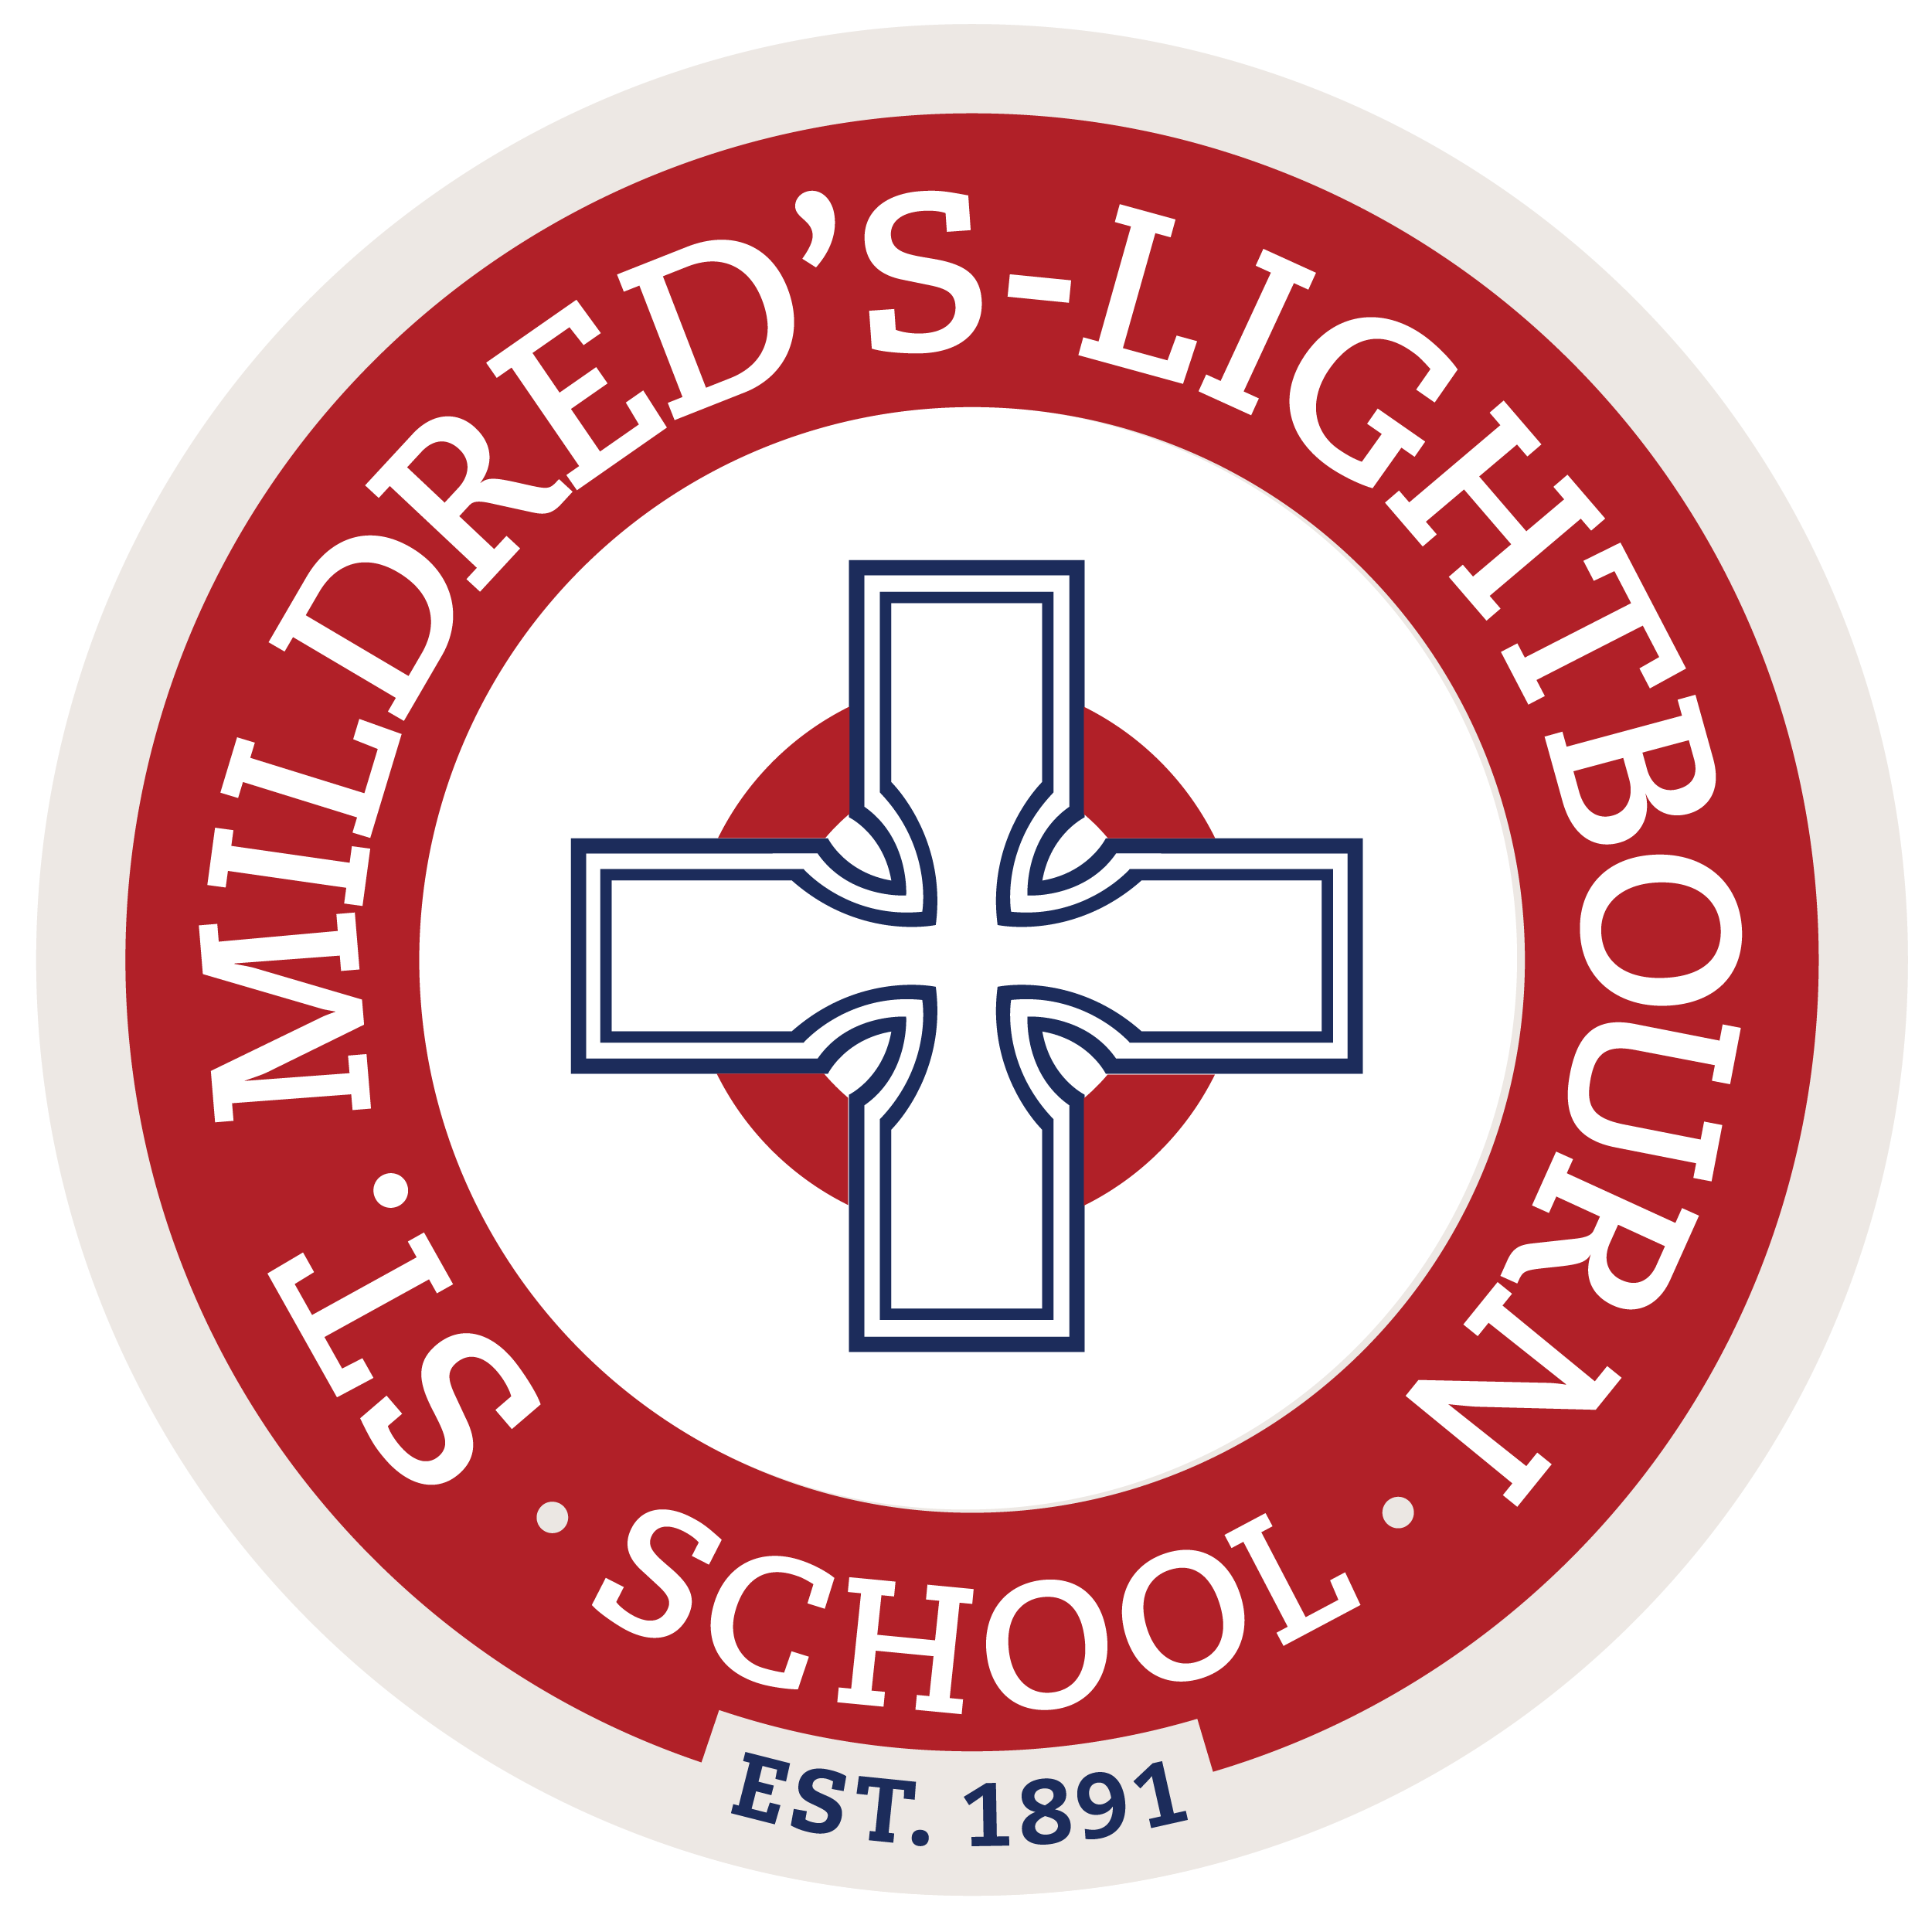 St. Mildred’s-Lightbourn School